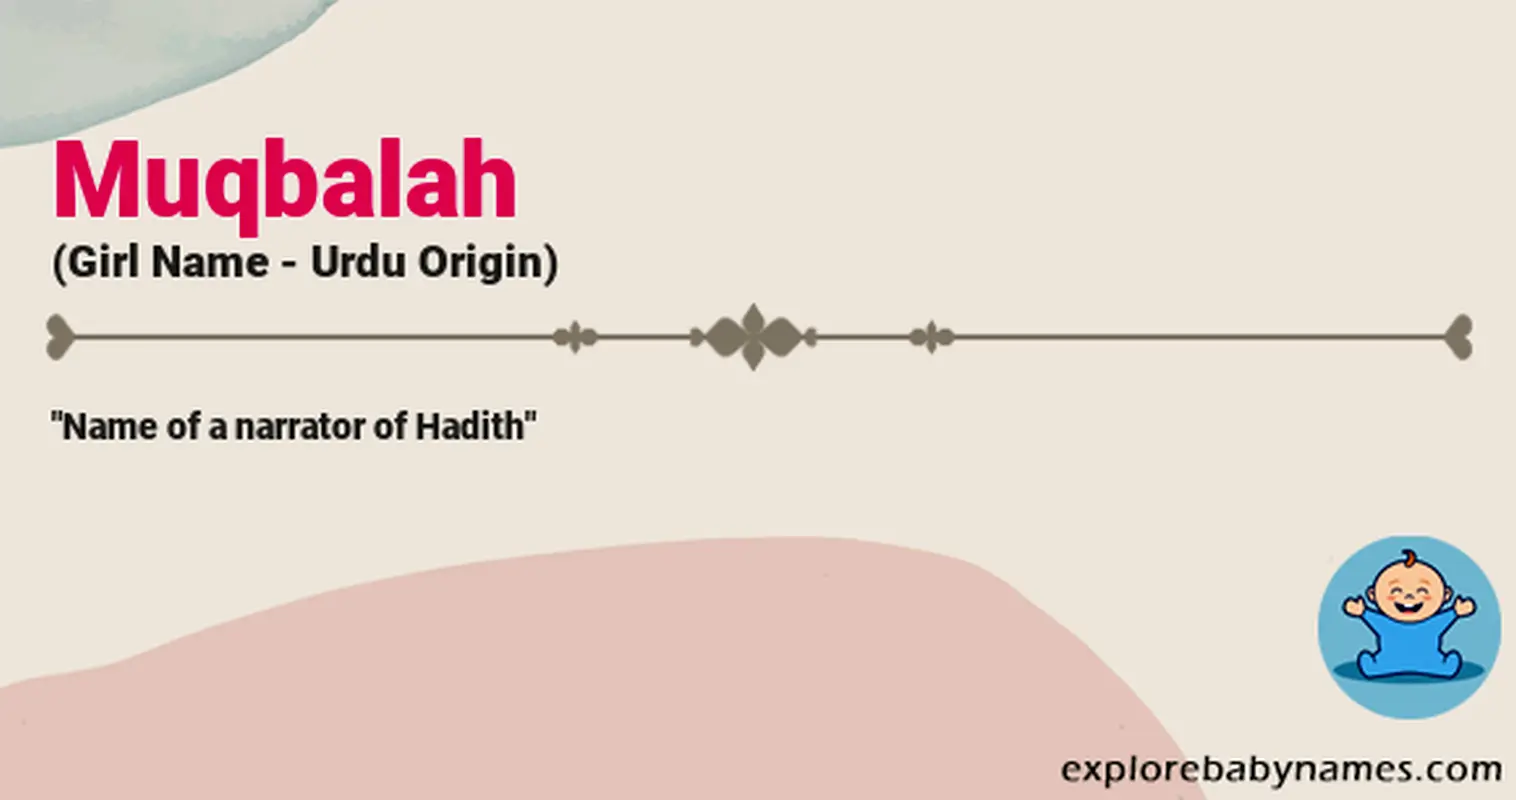 Meaning of Muqbalah